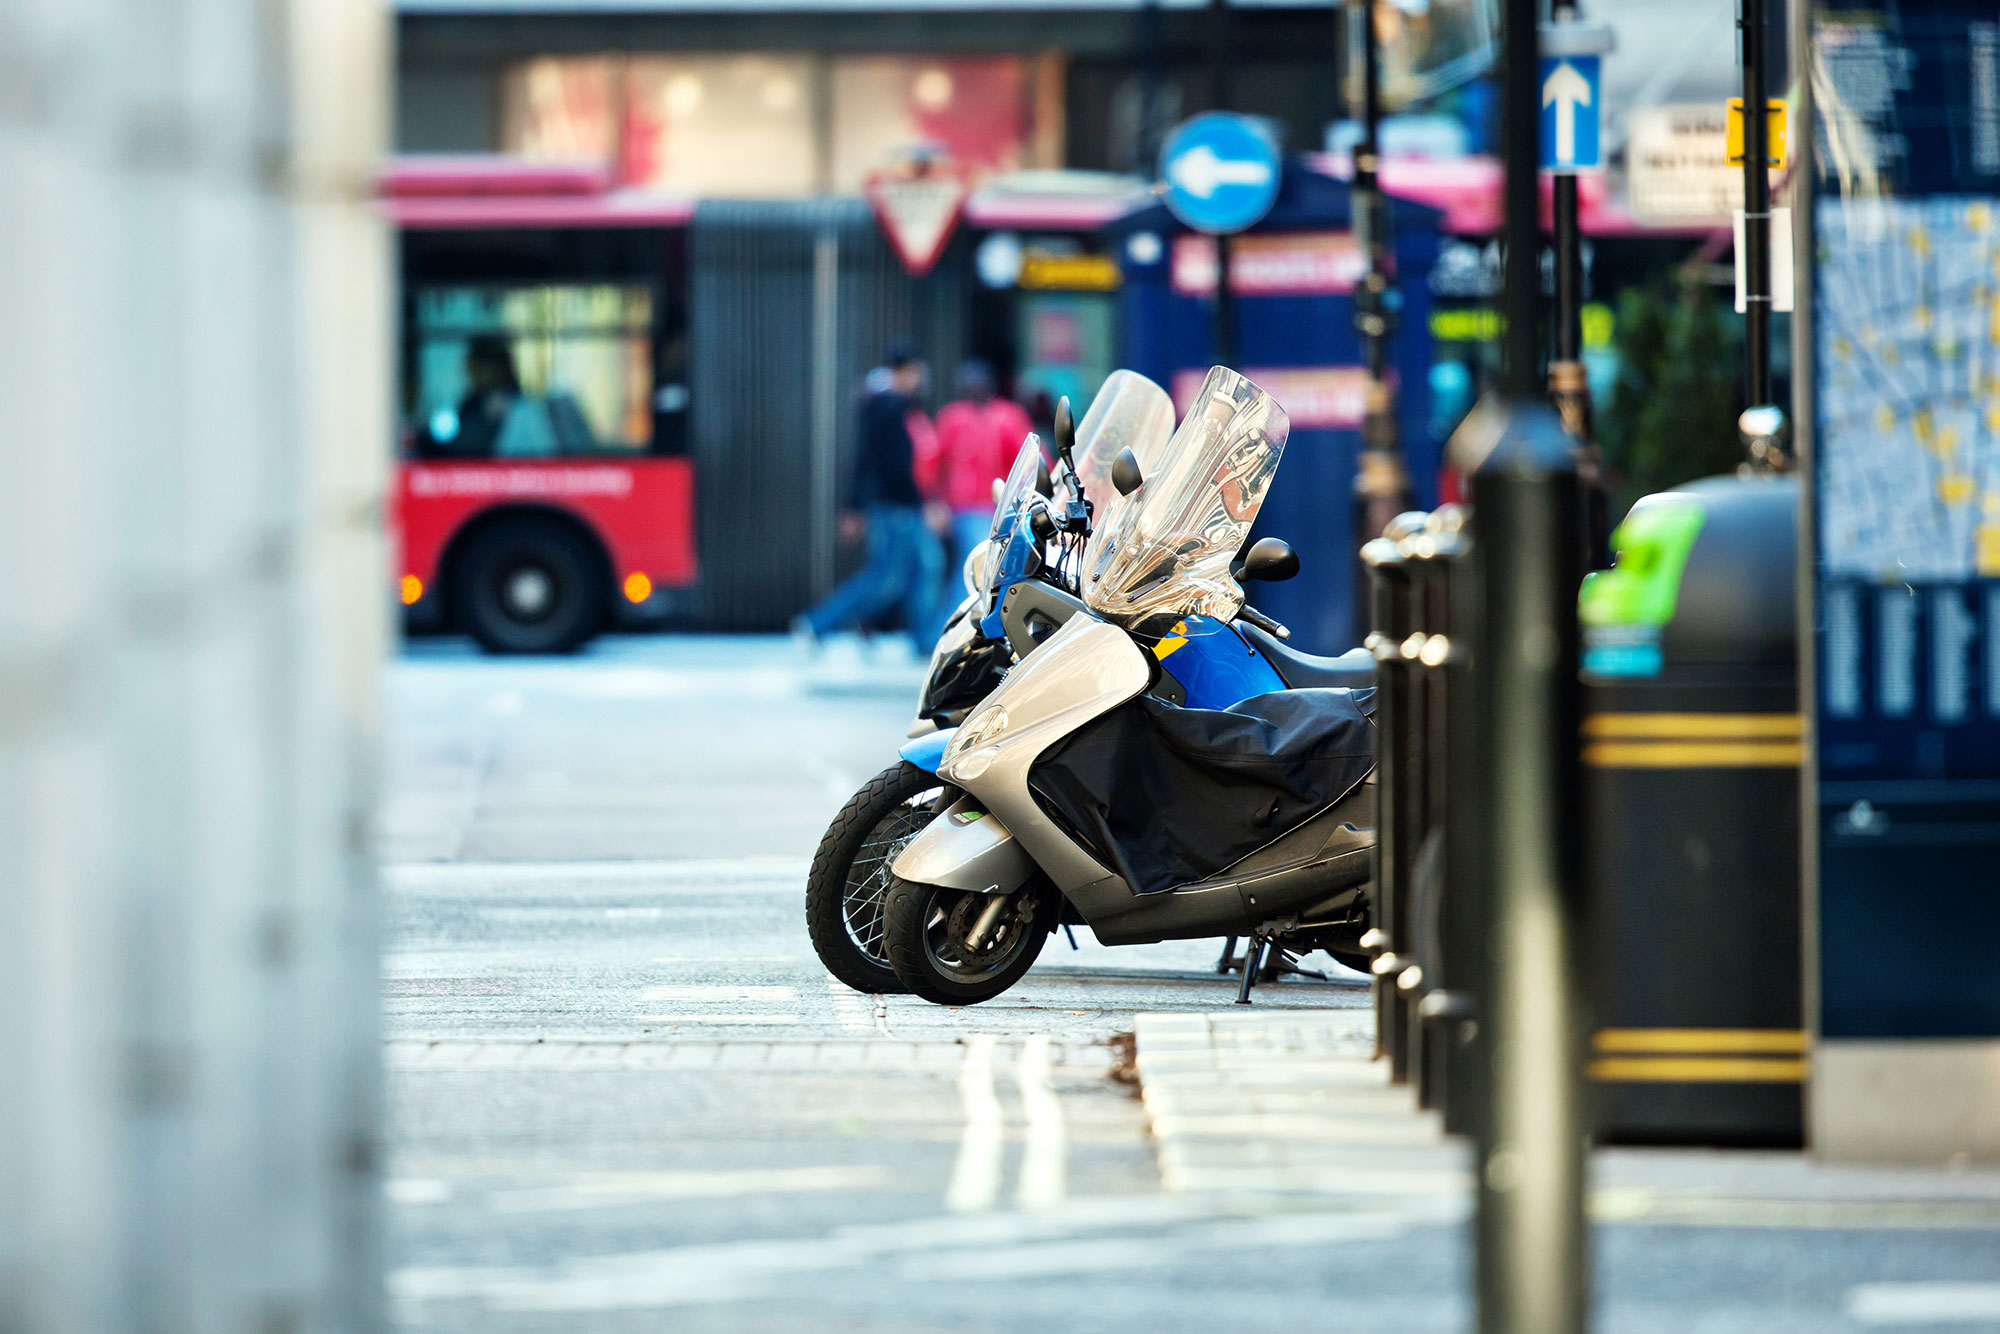 Motorbikes on the street in London.